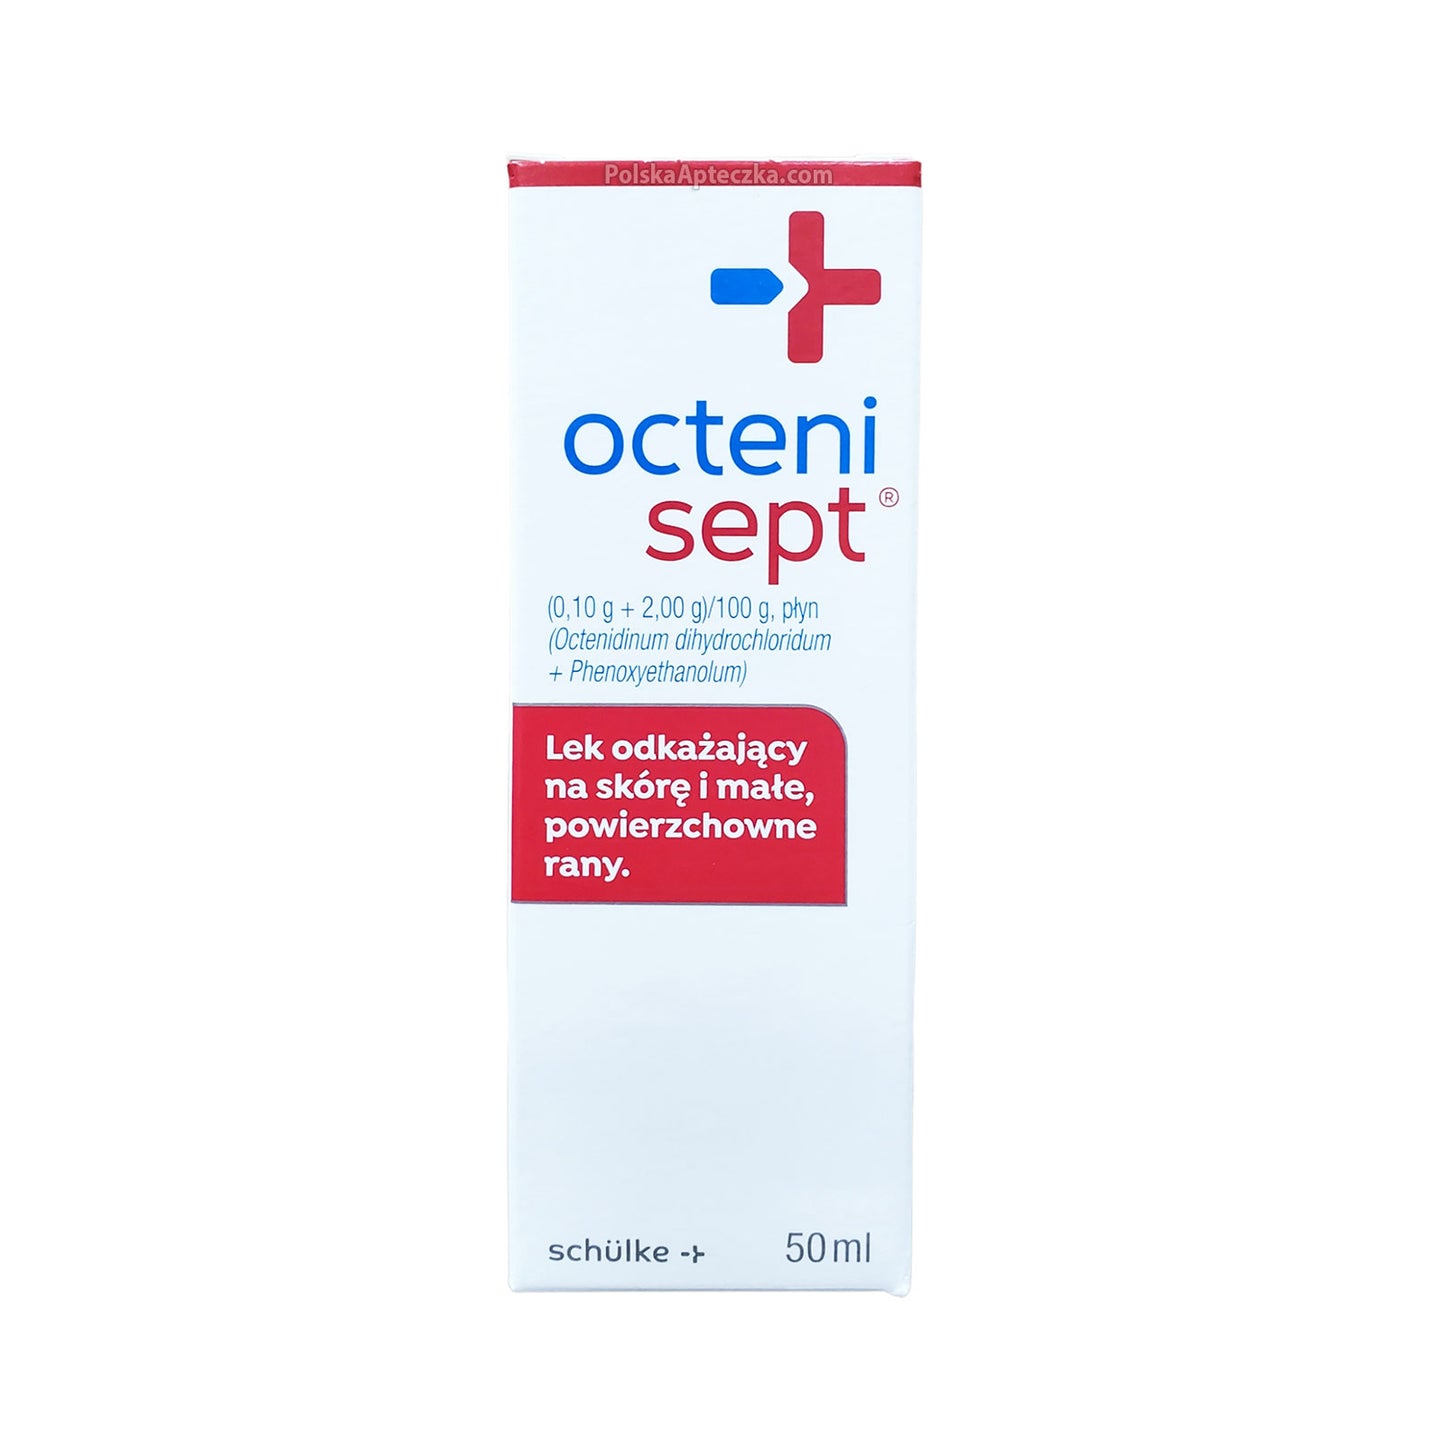 Octenisept Wound Antiseptic Spray